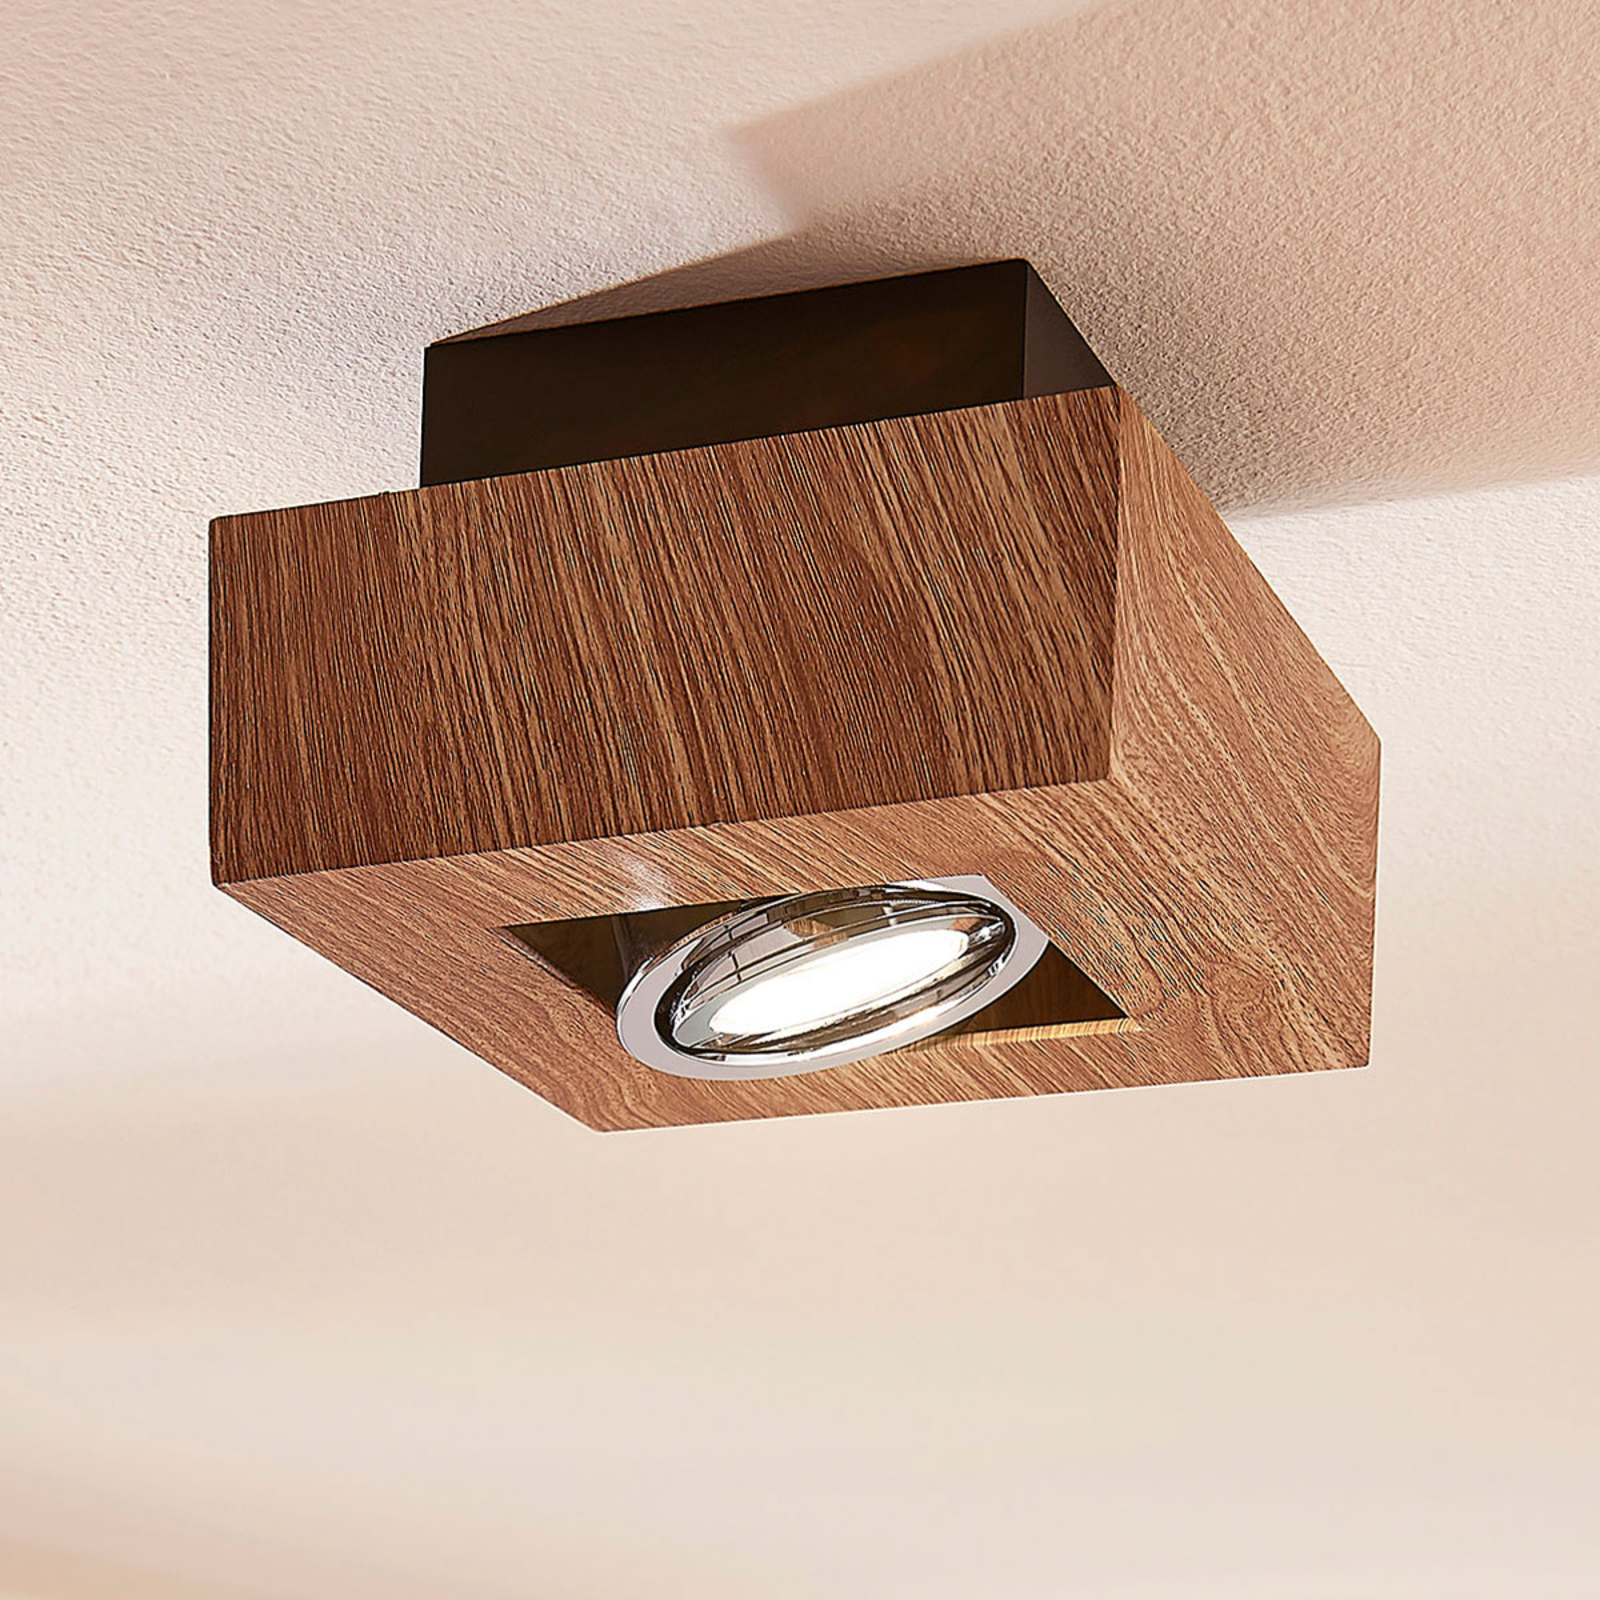 Lampa sufitowa LED Vince, 14x14cm wygląd drewna